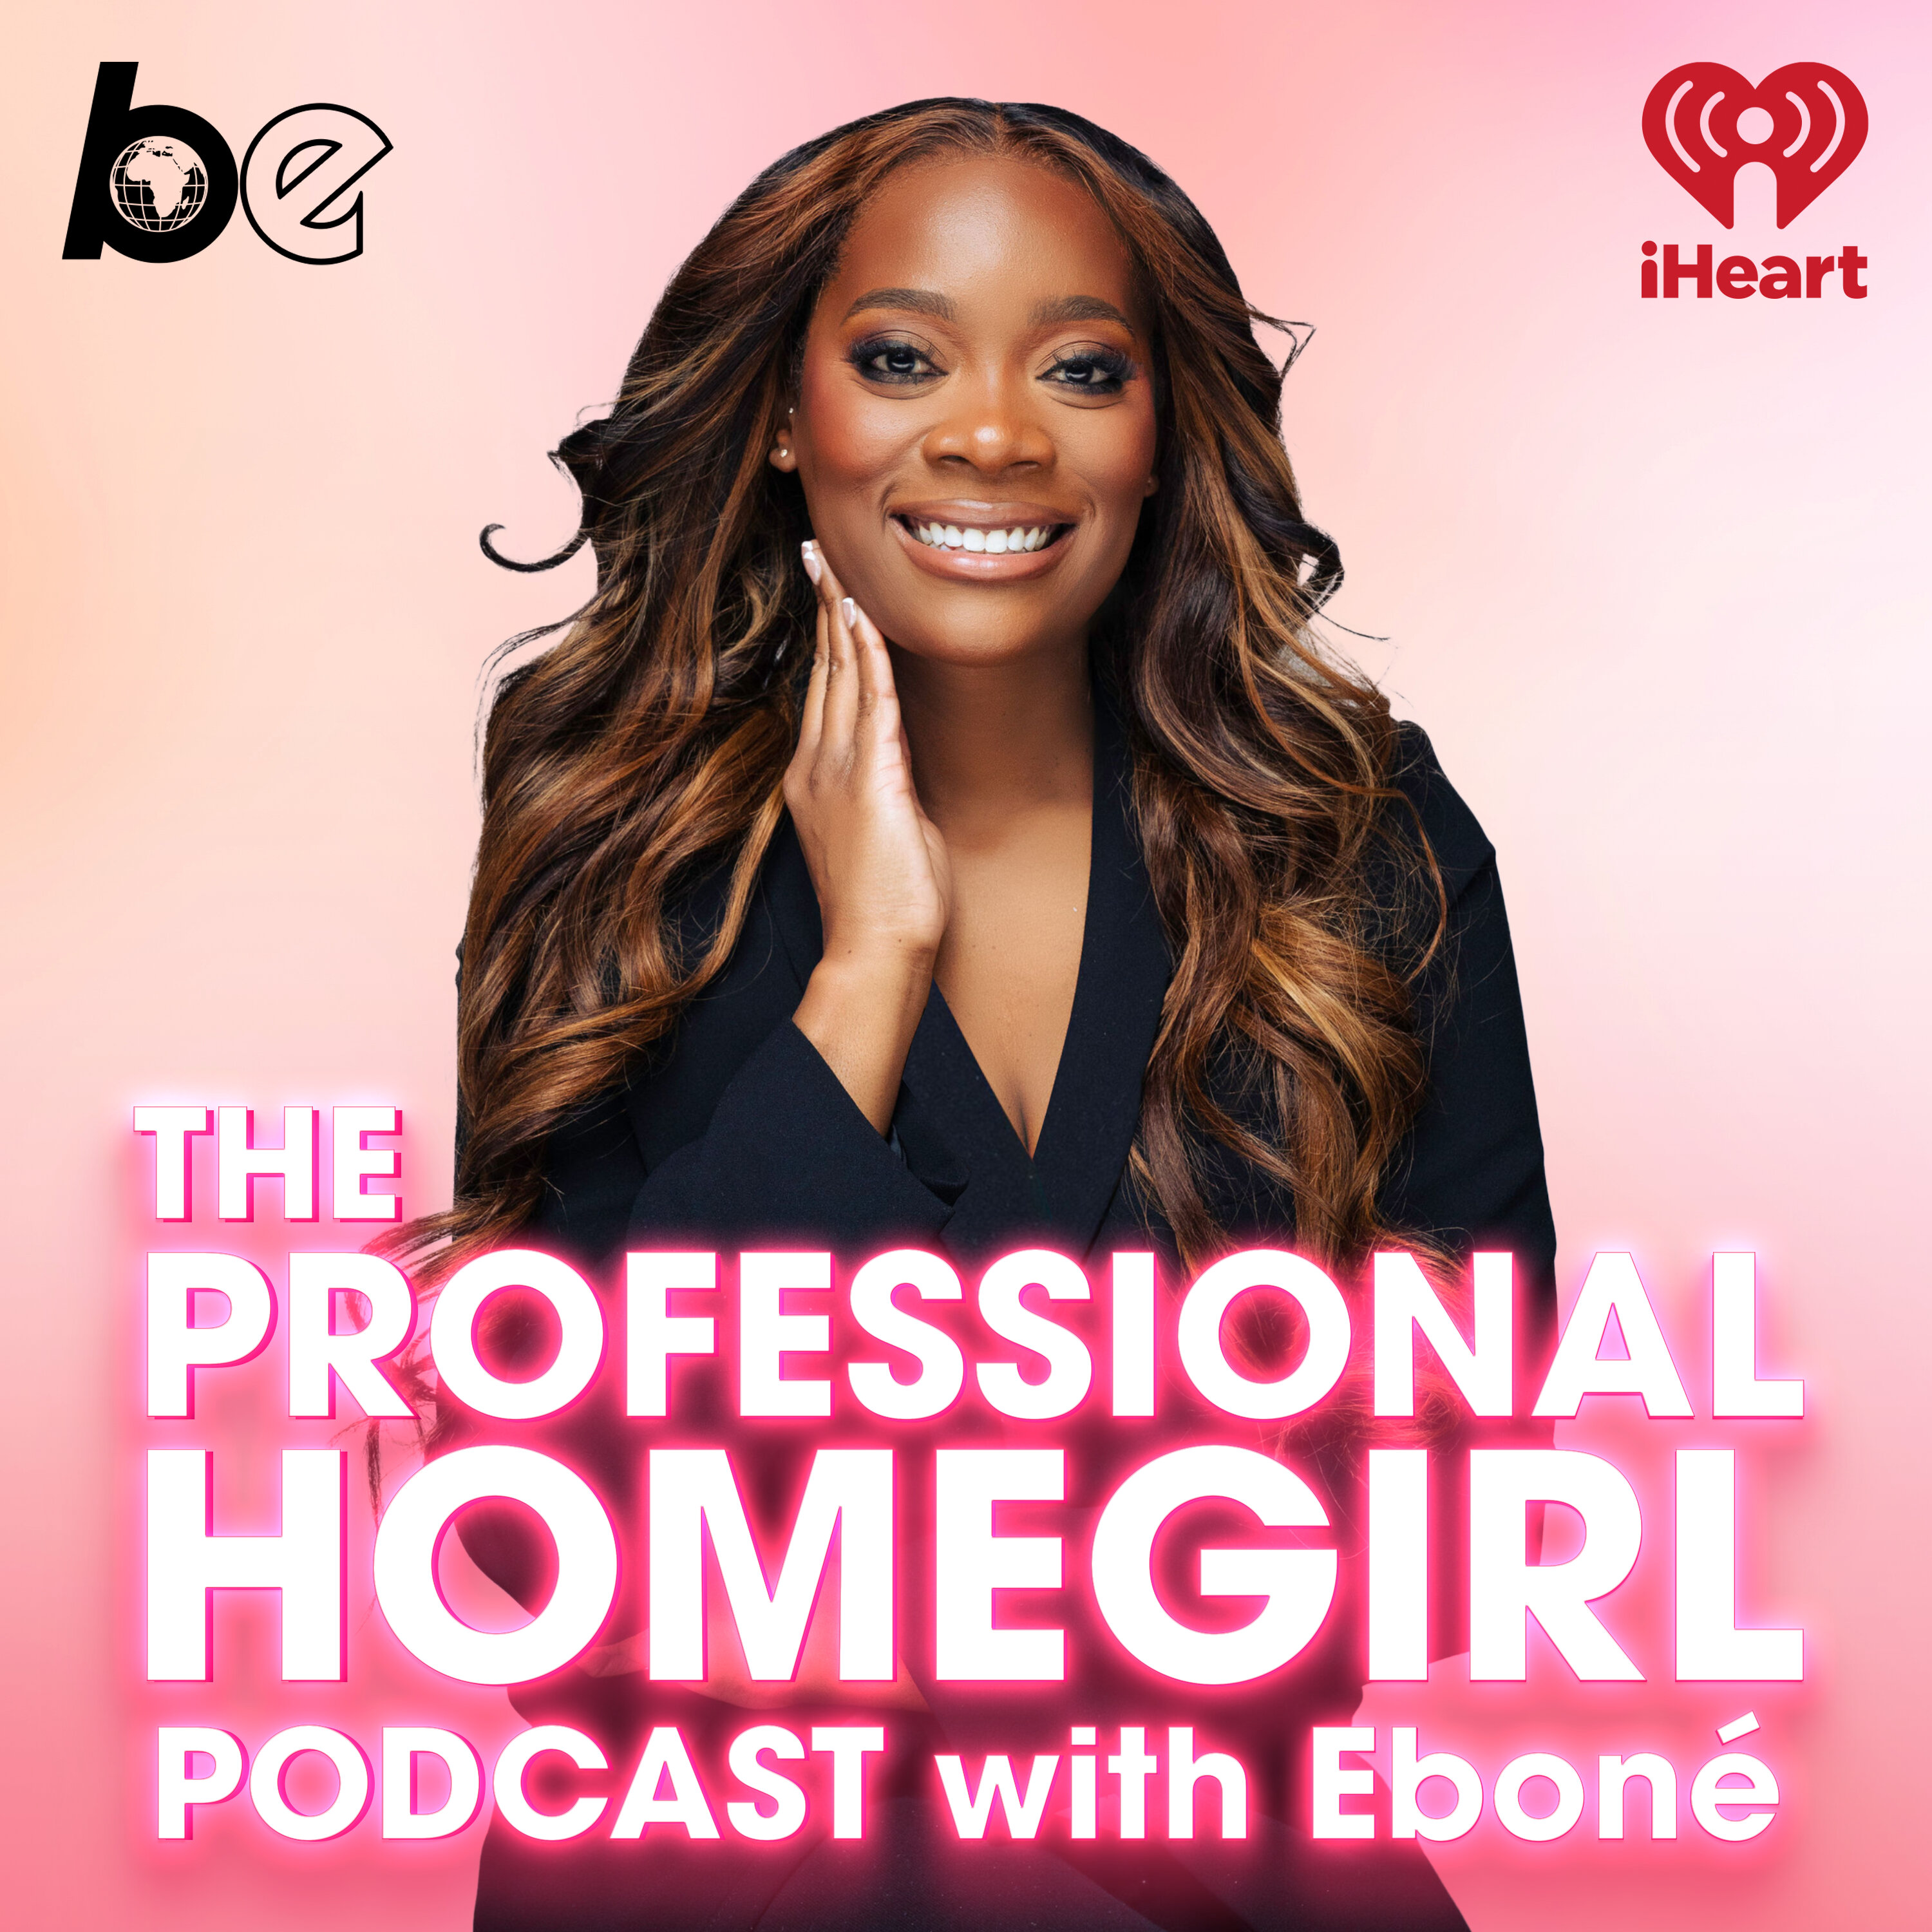 The Professional Homegirl Podcast podcast show image